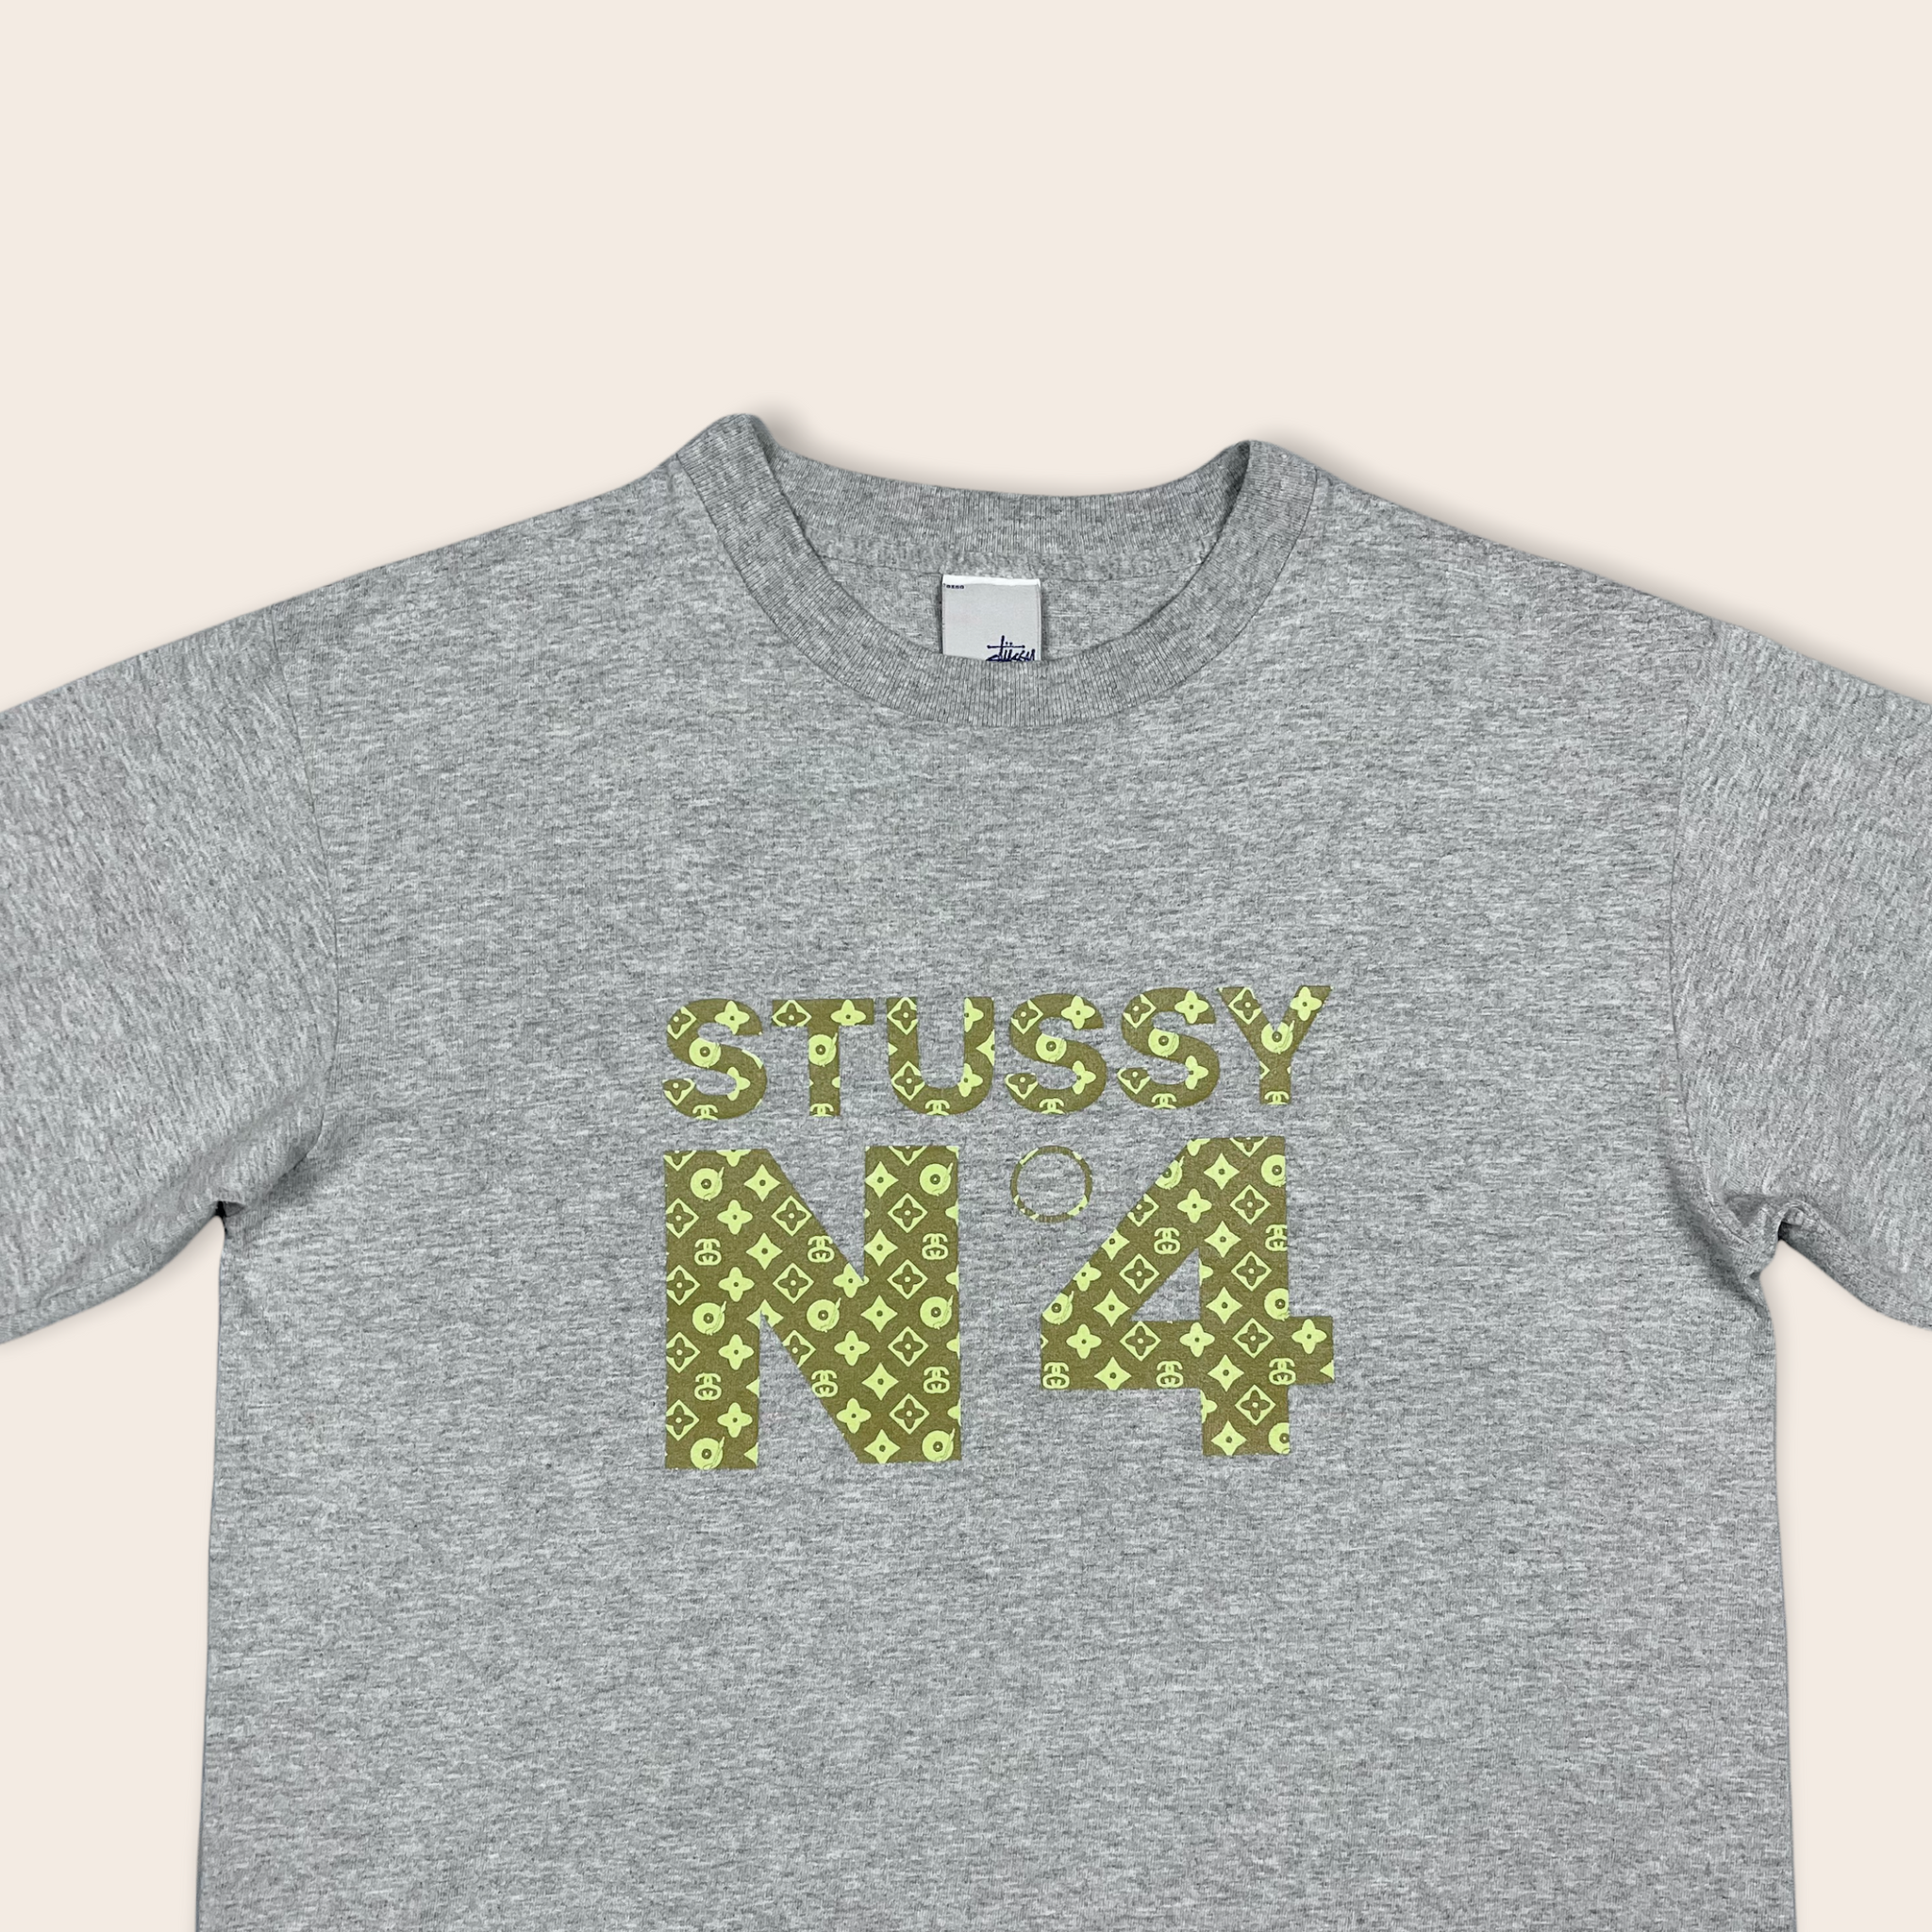 stussy monogram shirt